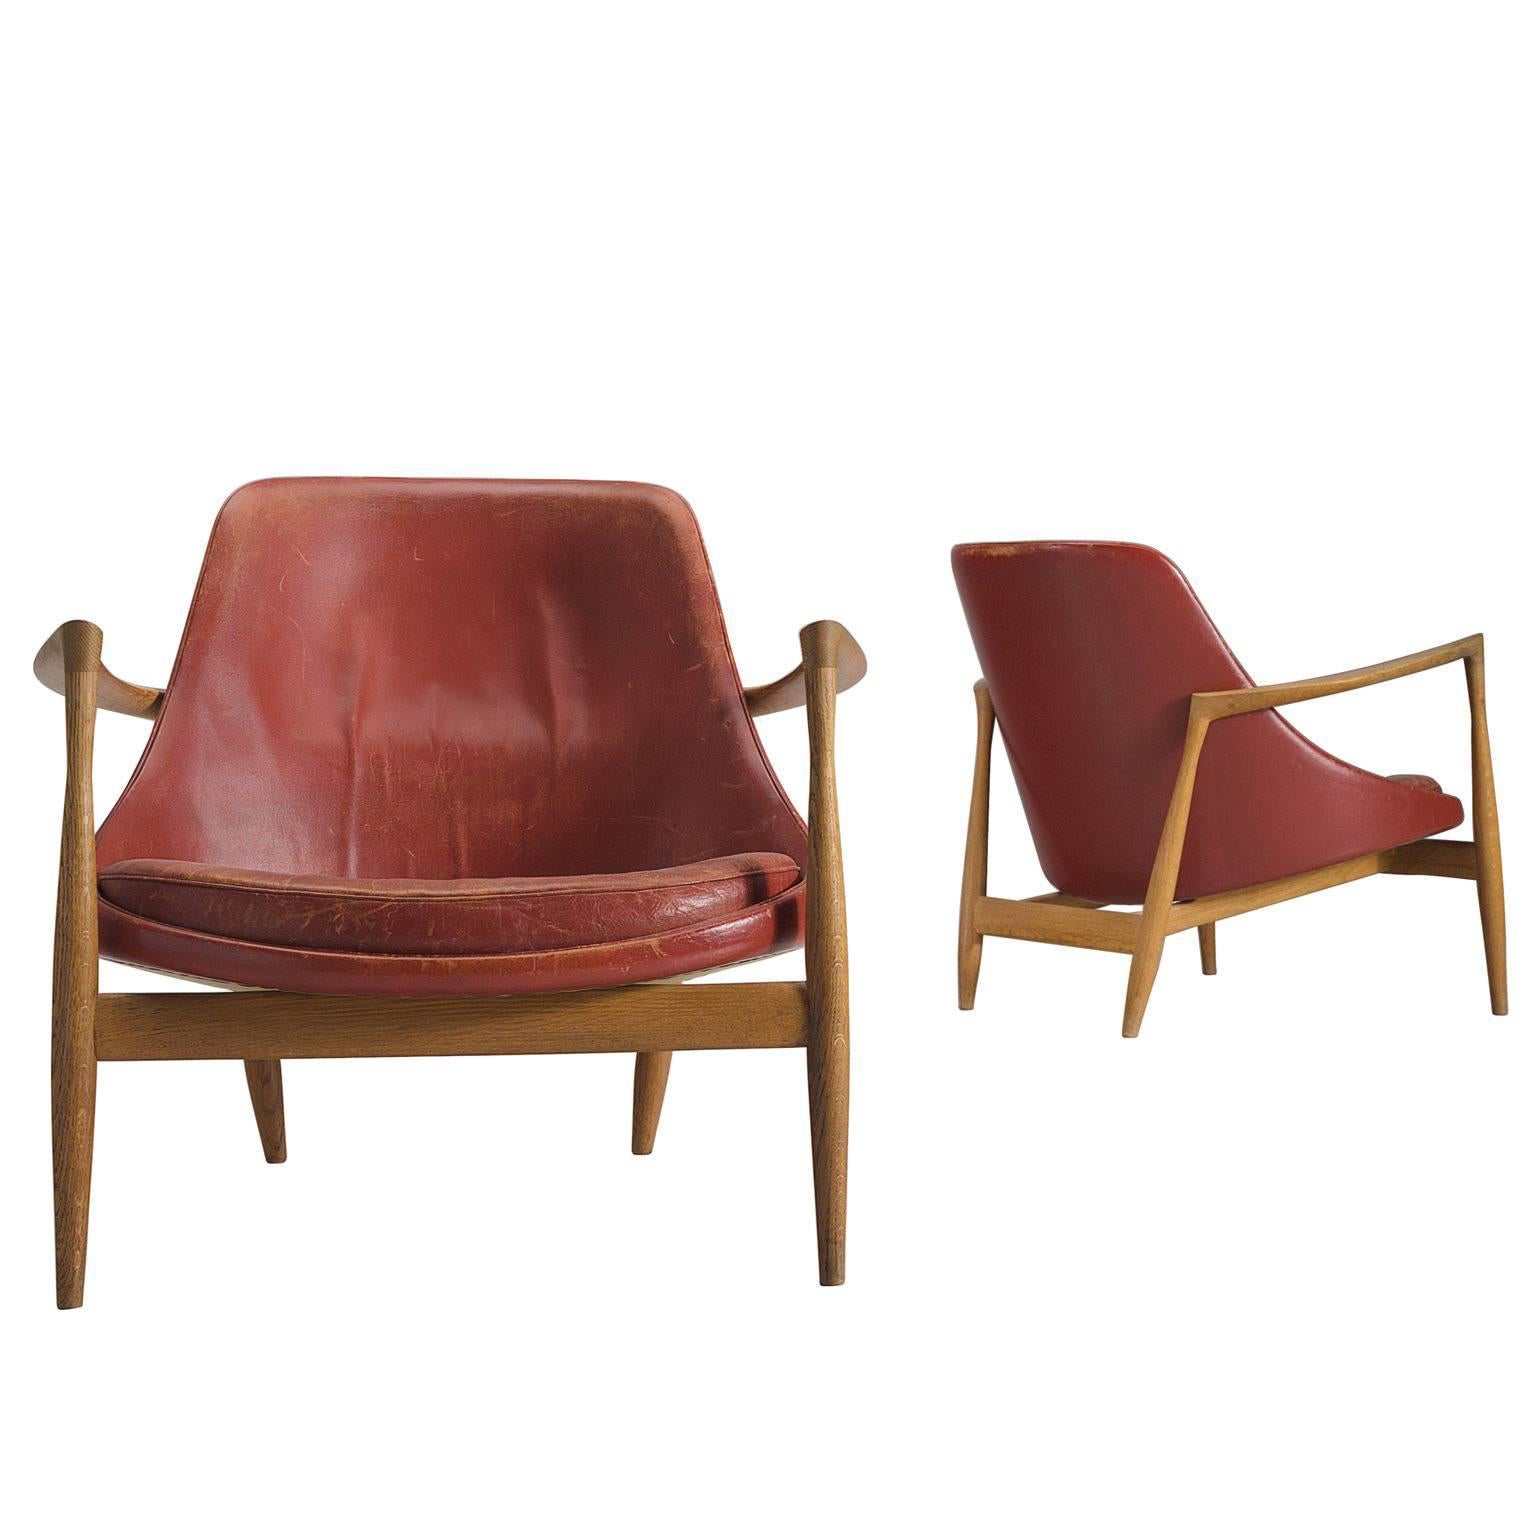 Ib Kofod-Larsen 'Elizabeth' Chairs in Original Aged Leather